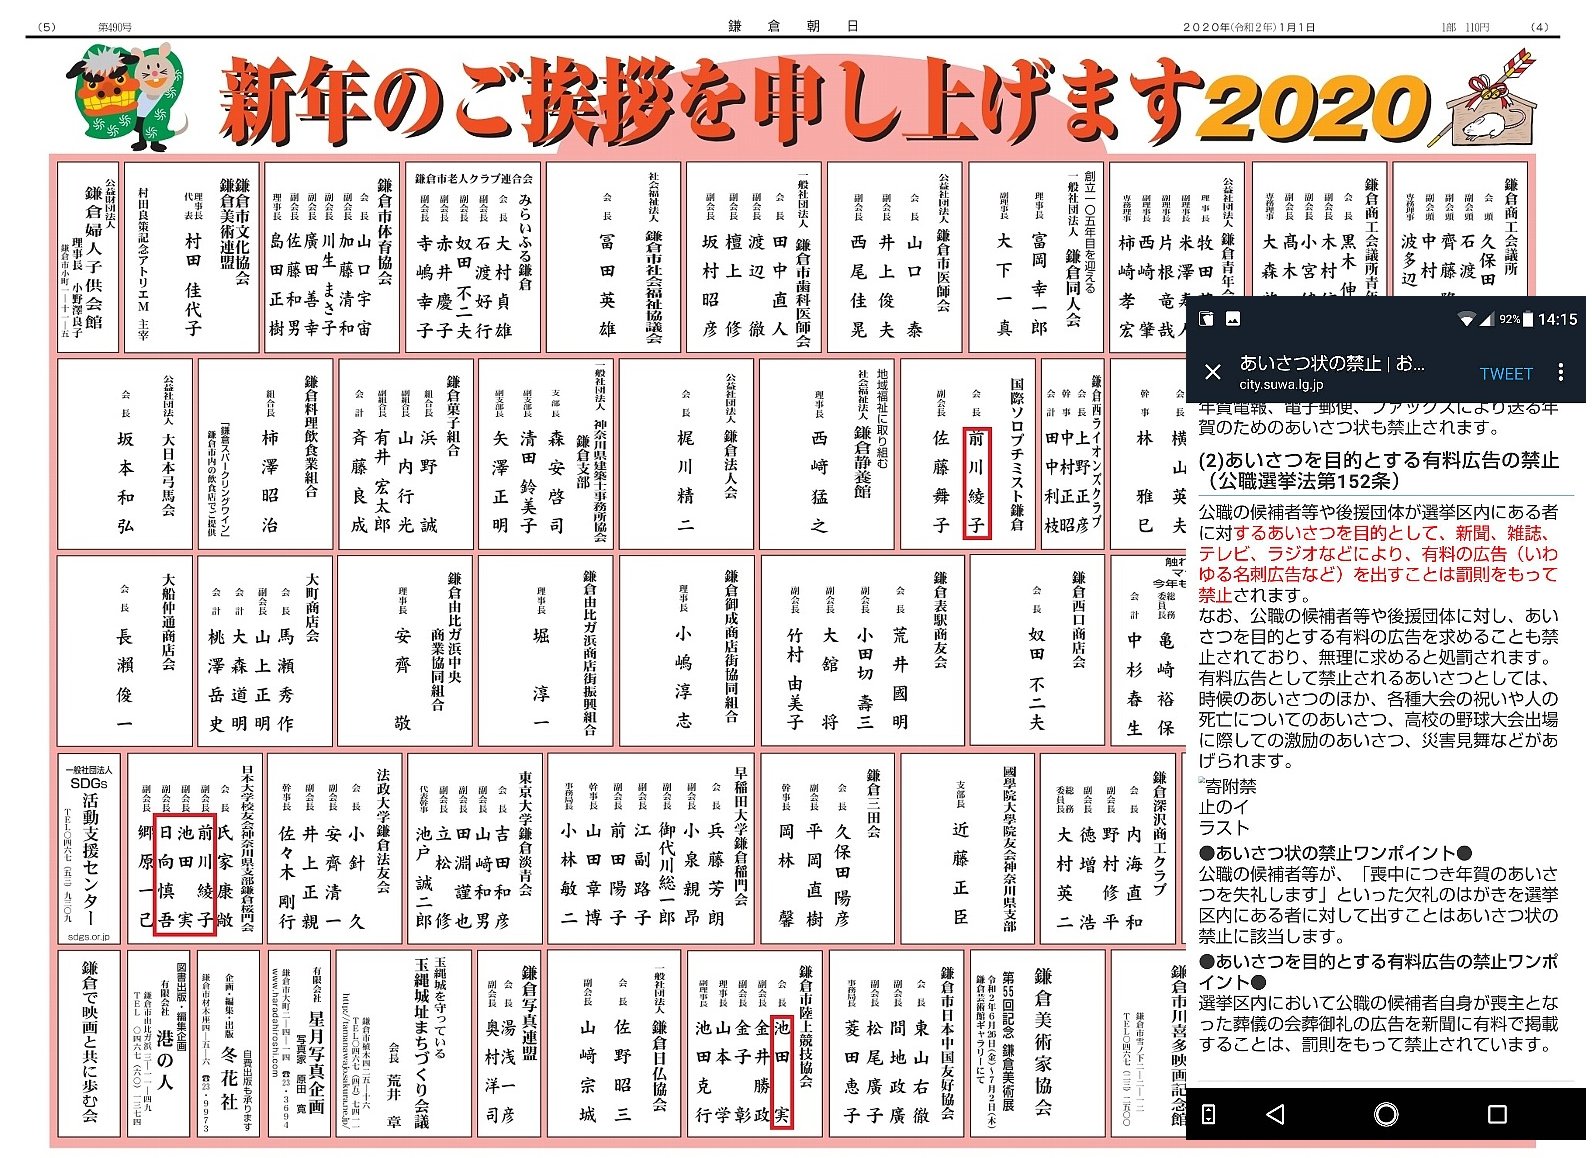 http://fujikama.coolblog.jp/2020/20200104.jpg